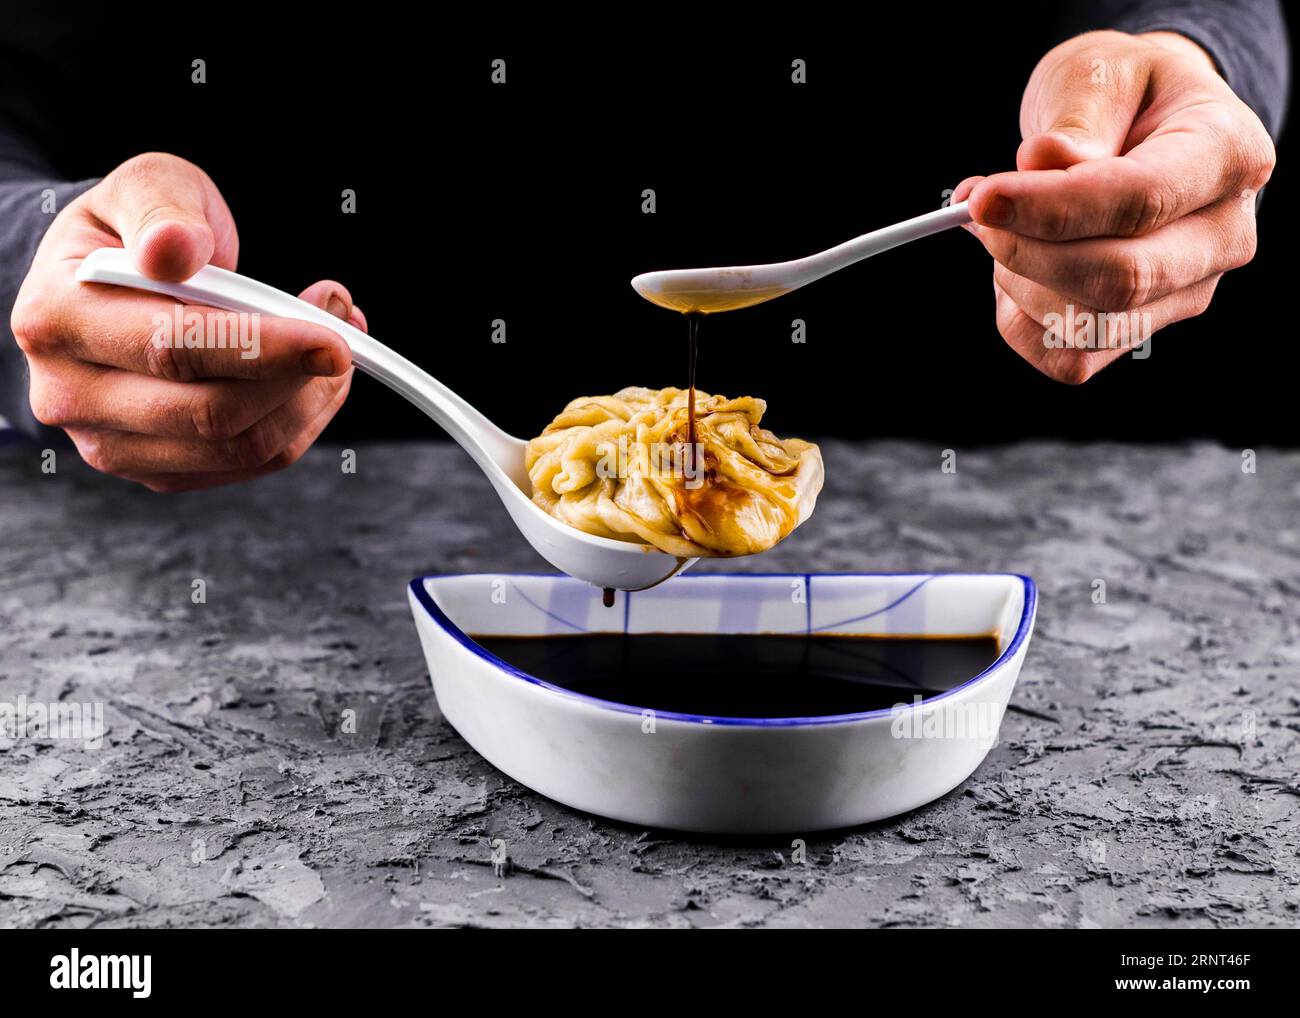 Hands pouring sauce dumpling front view Stock Photo